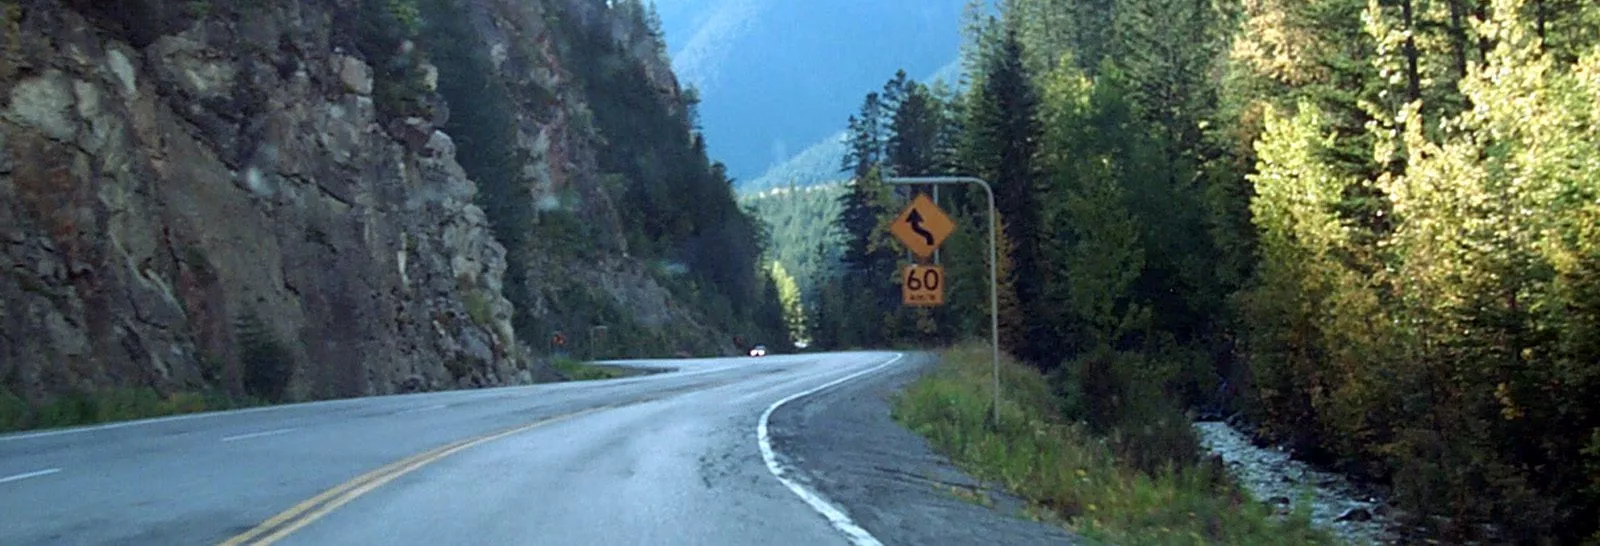 Kootenay National Park swervy road -sliver,jpg